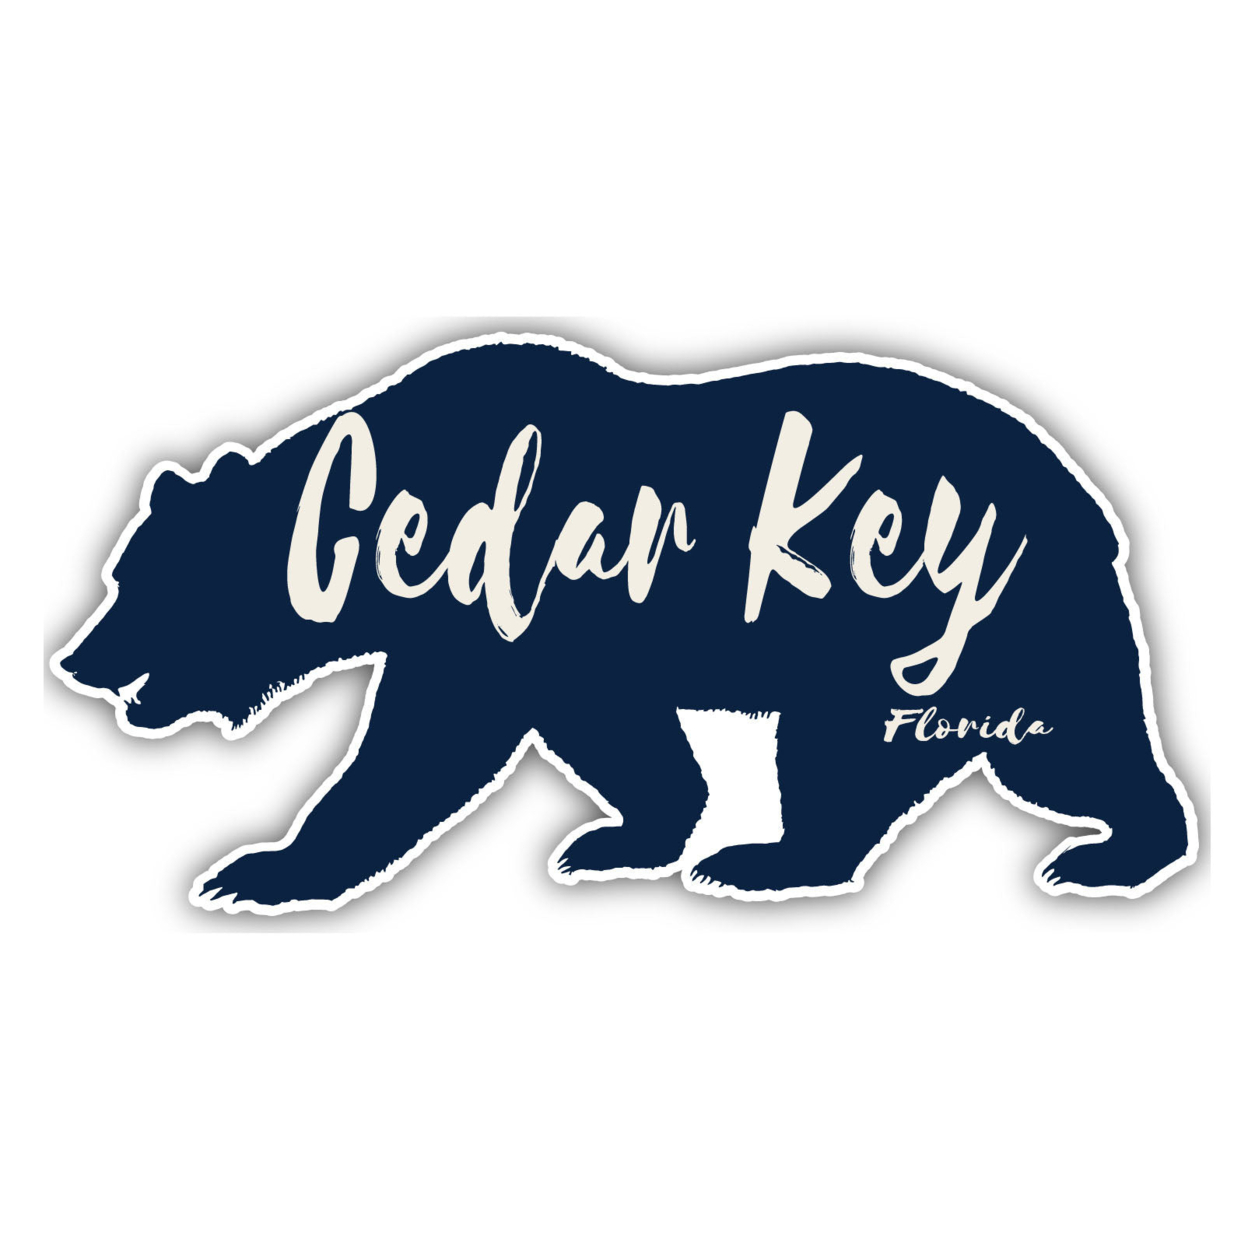 Cedar Key Florida Souvenir Decorative Stickers (Choose Theme And Size) - 4-Pack, 6-Inch, Camp Life